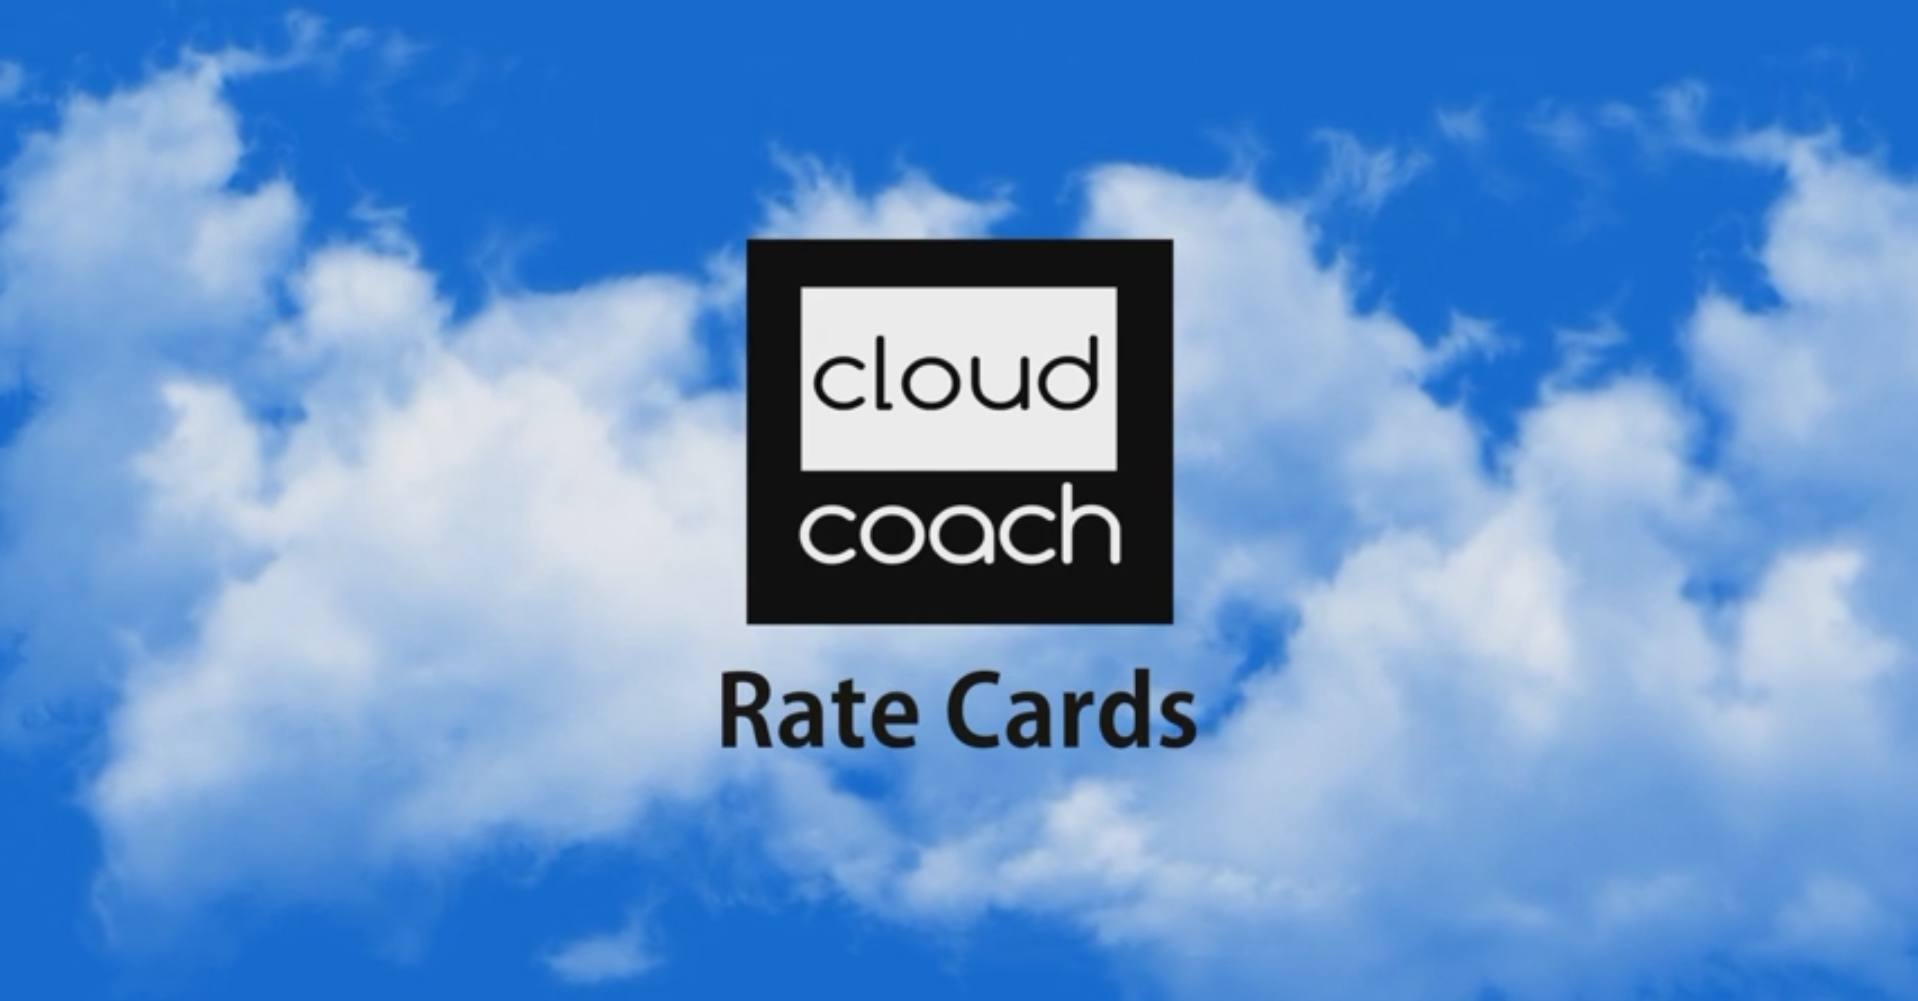 Cloud Coach Rate Cards